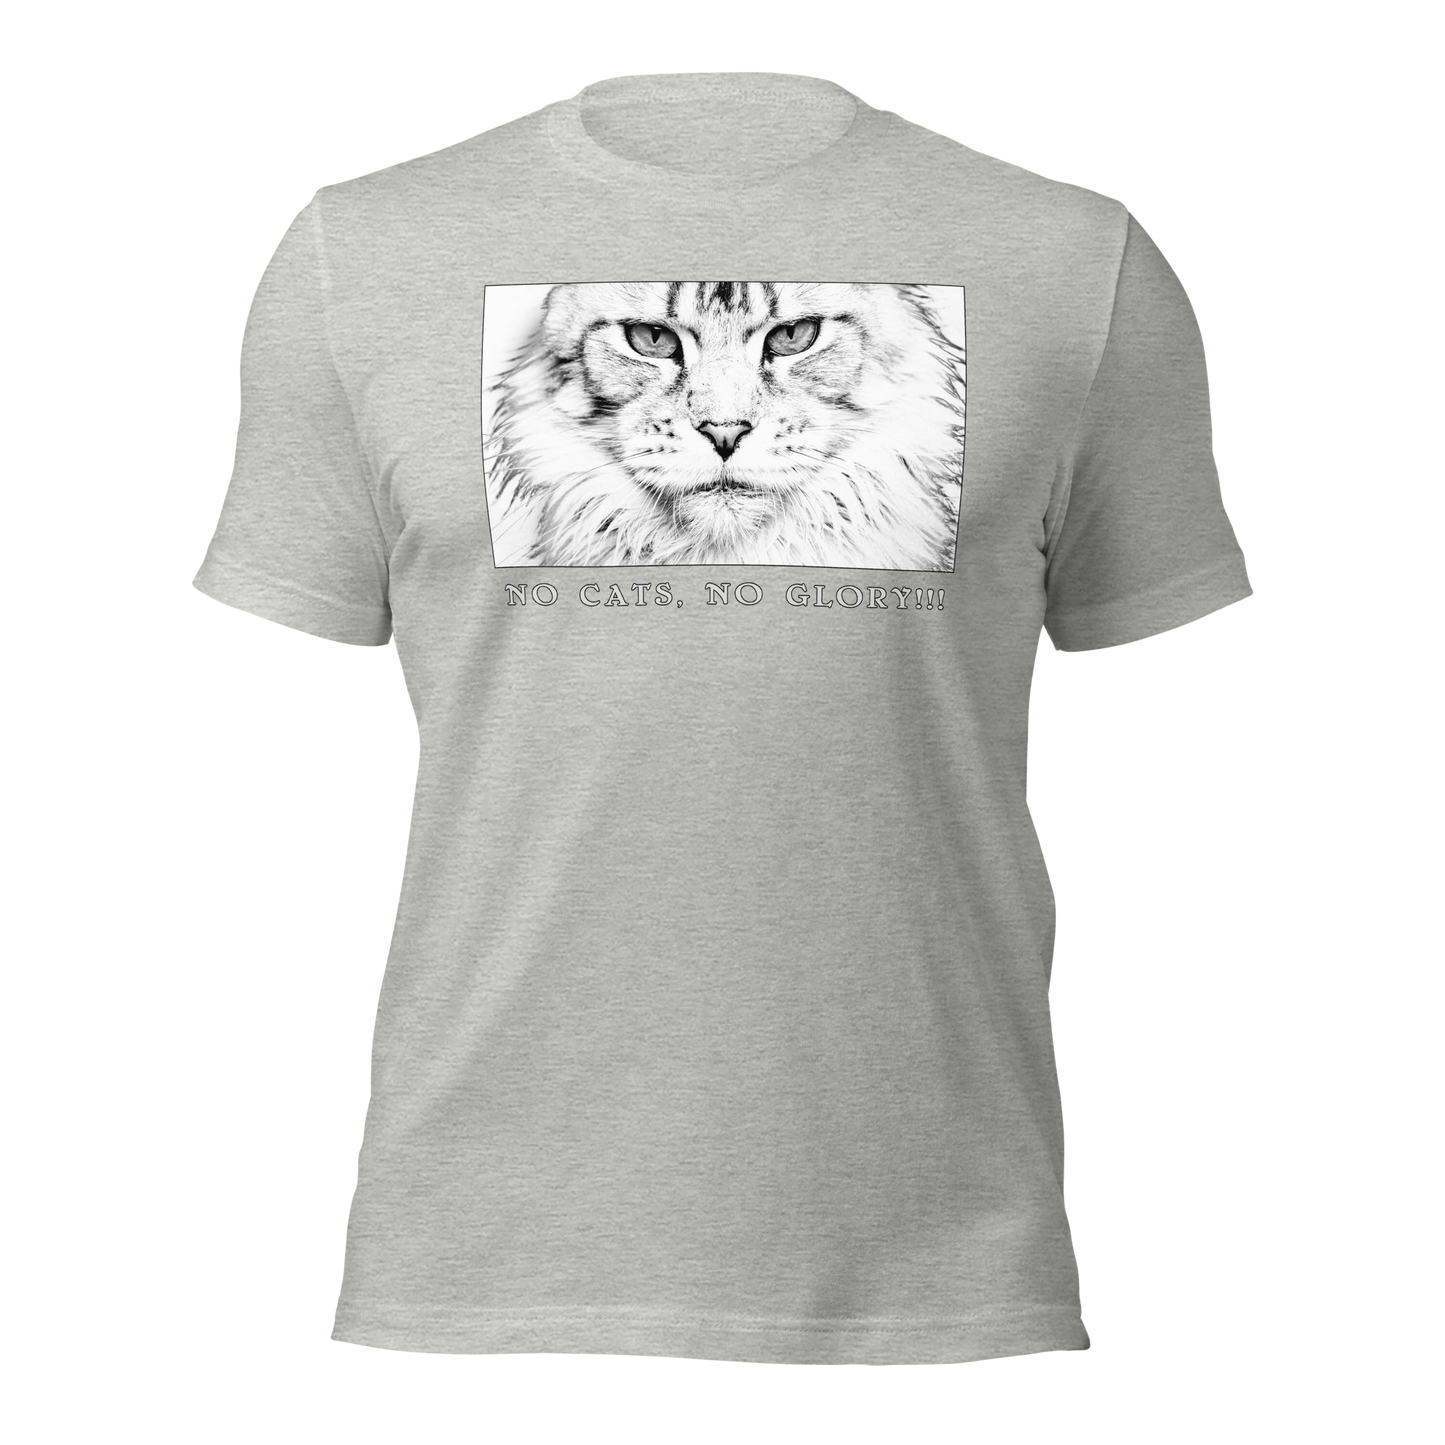 Unisex T-Shirt- "No Cats No Glory" Verona front print.